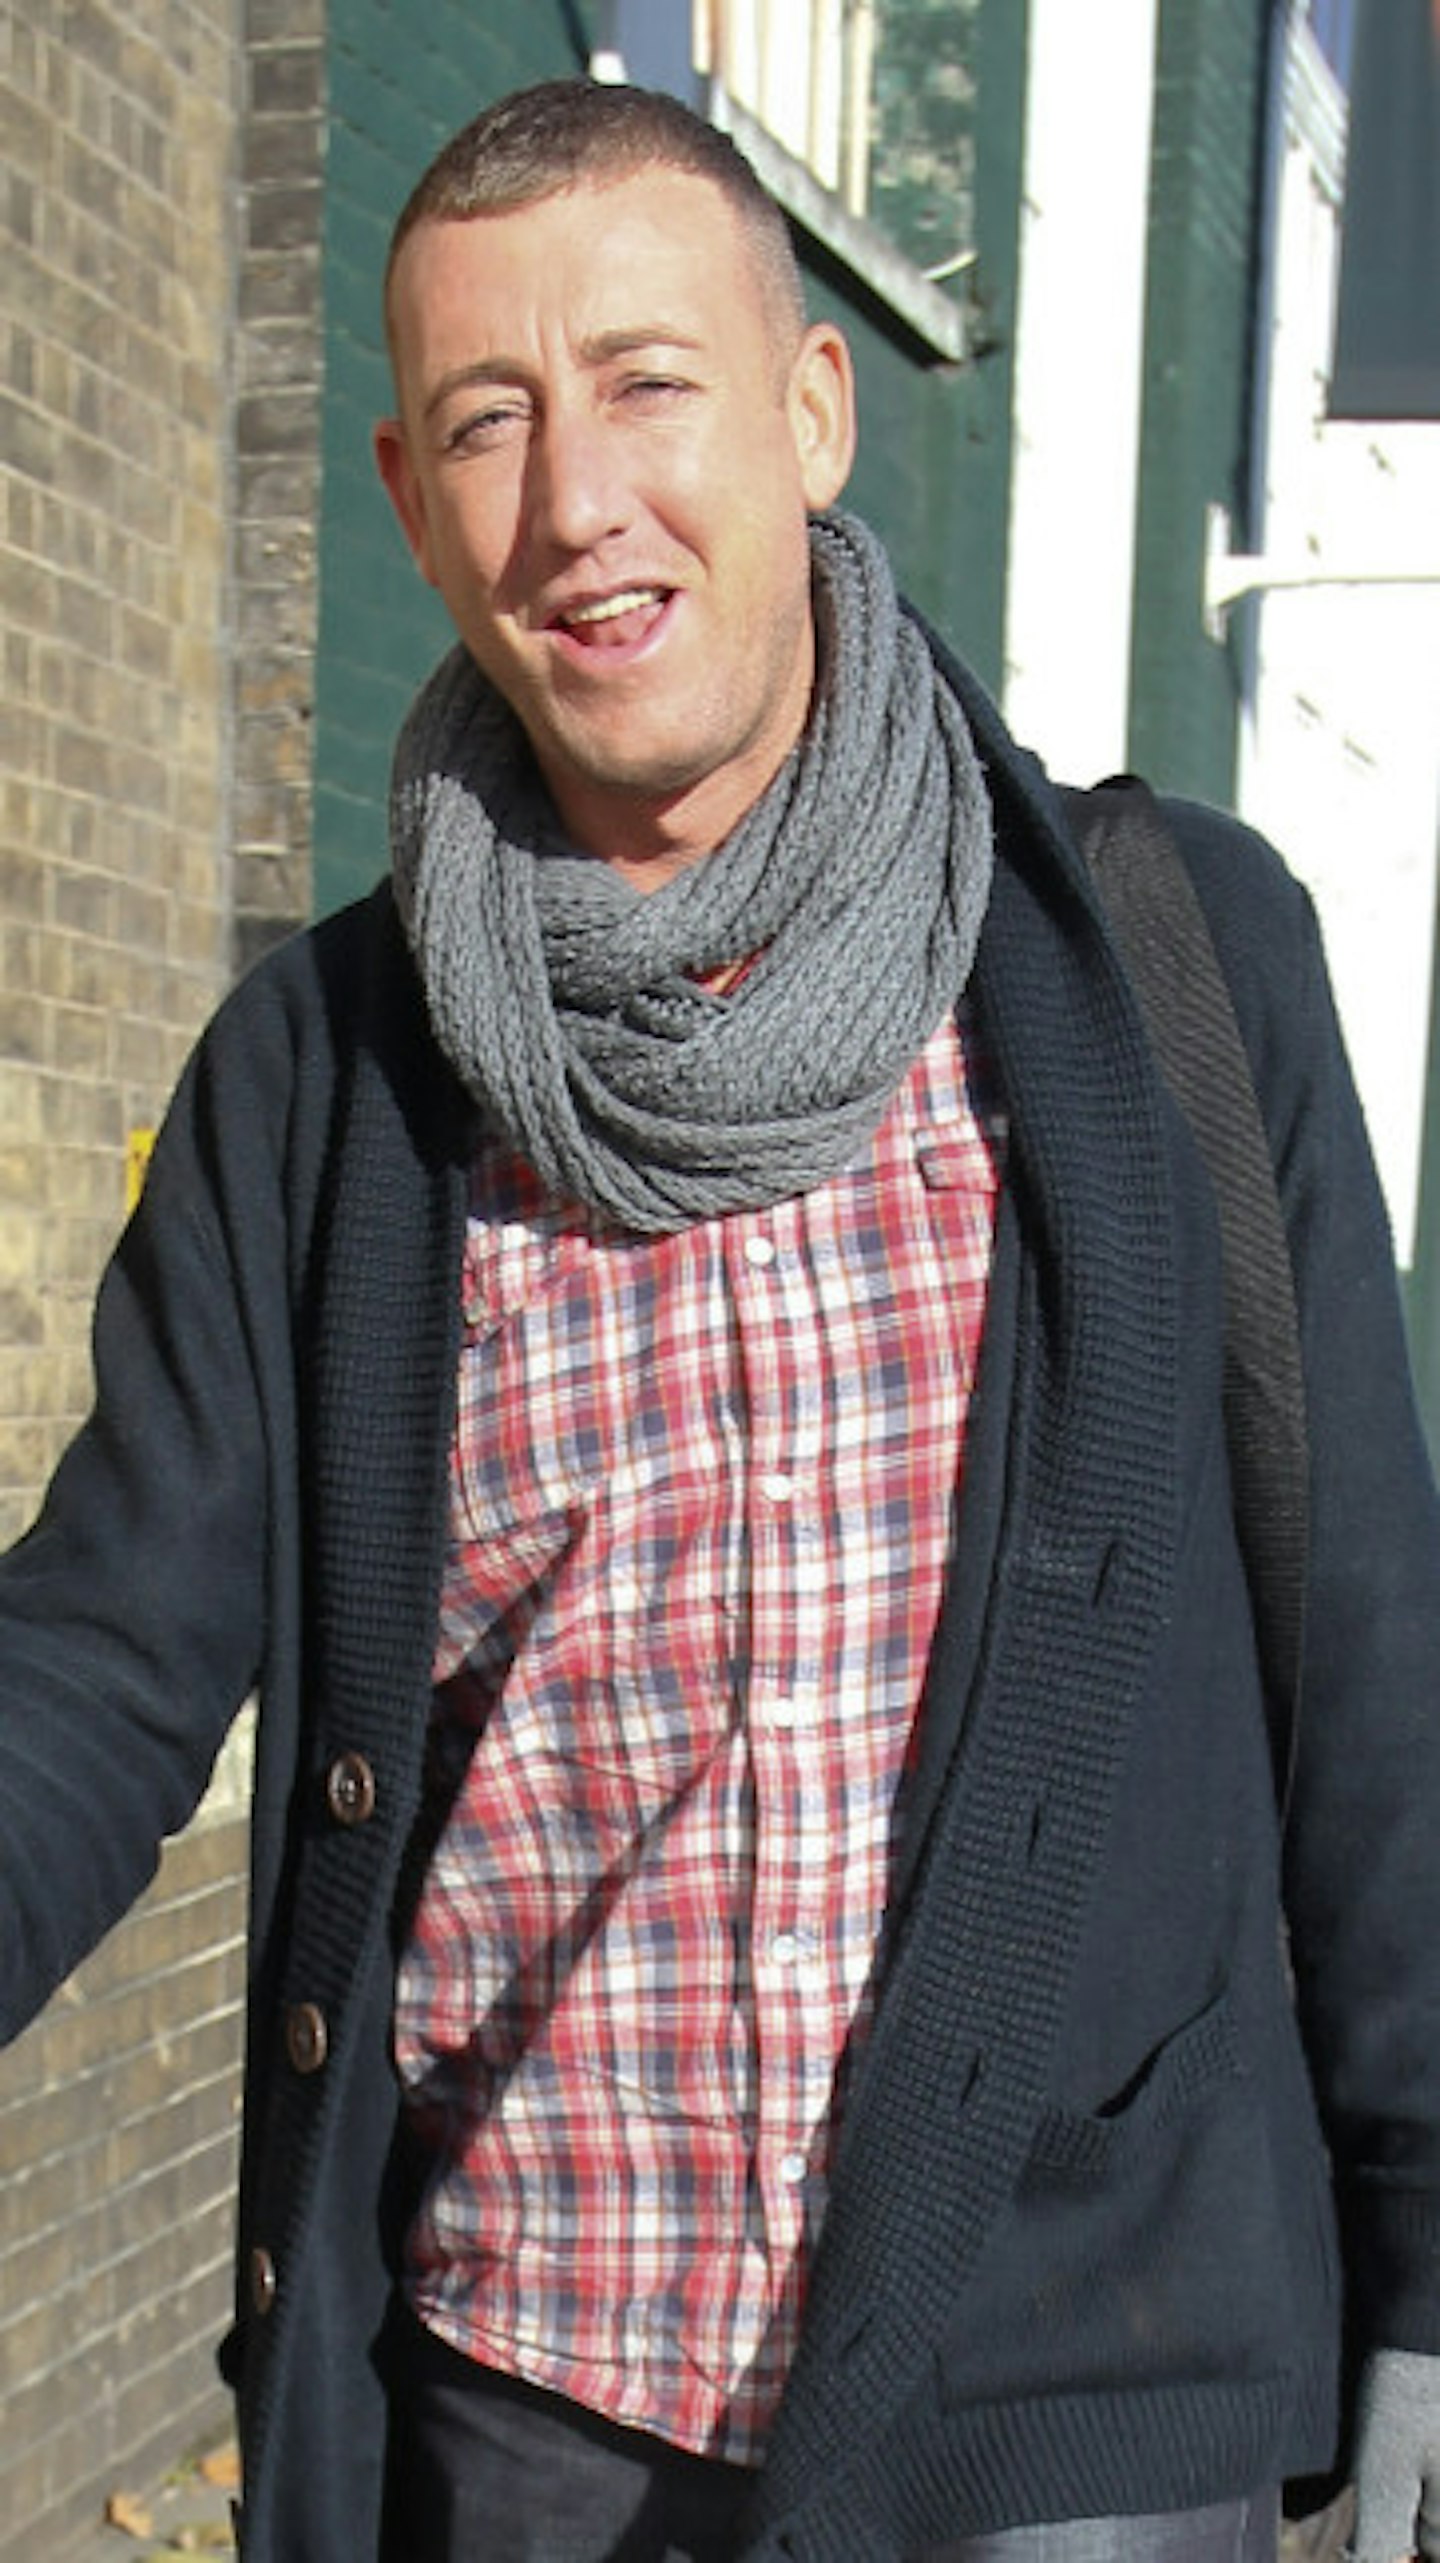 Christopher back in 2012